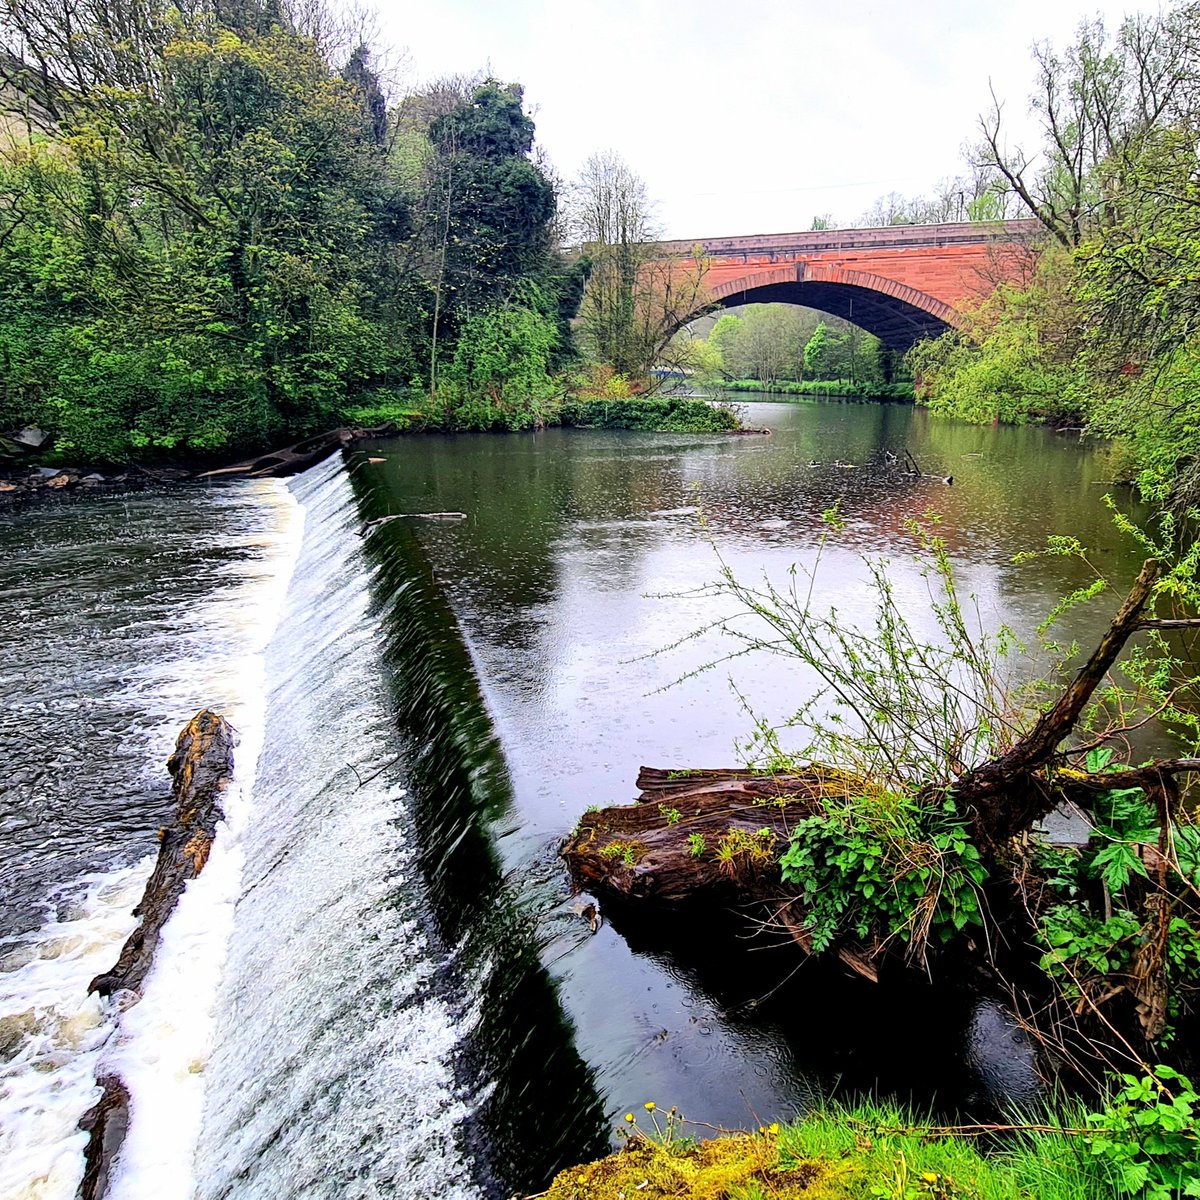 The weir for the North Woodside Flint Mill on the River Kelvin in Glasgow.

#glasgow #riverkelvin #flintmill #waterpower #glasgowhistory #industrialhistory #kelvinwalkway